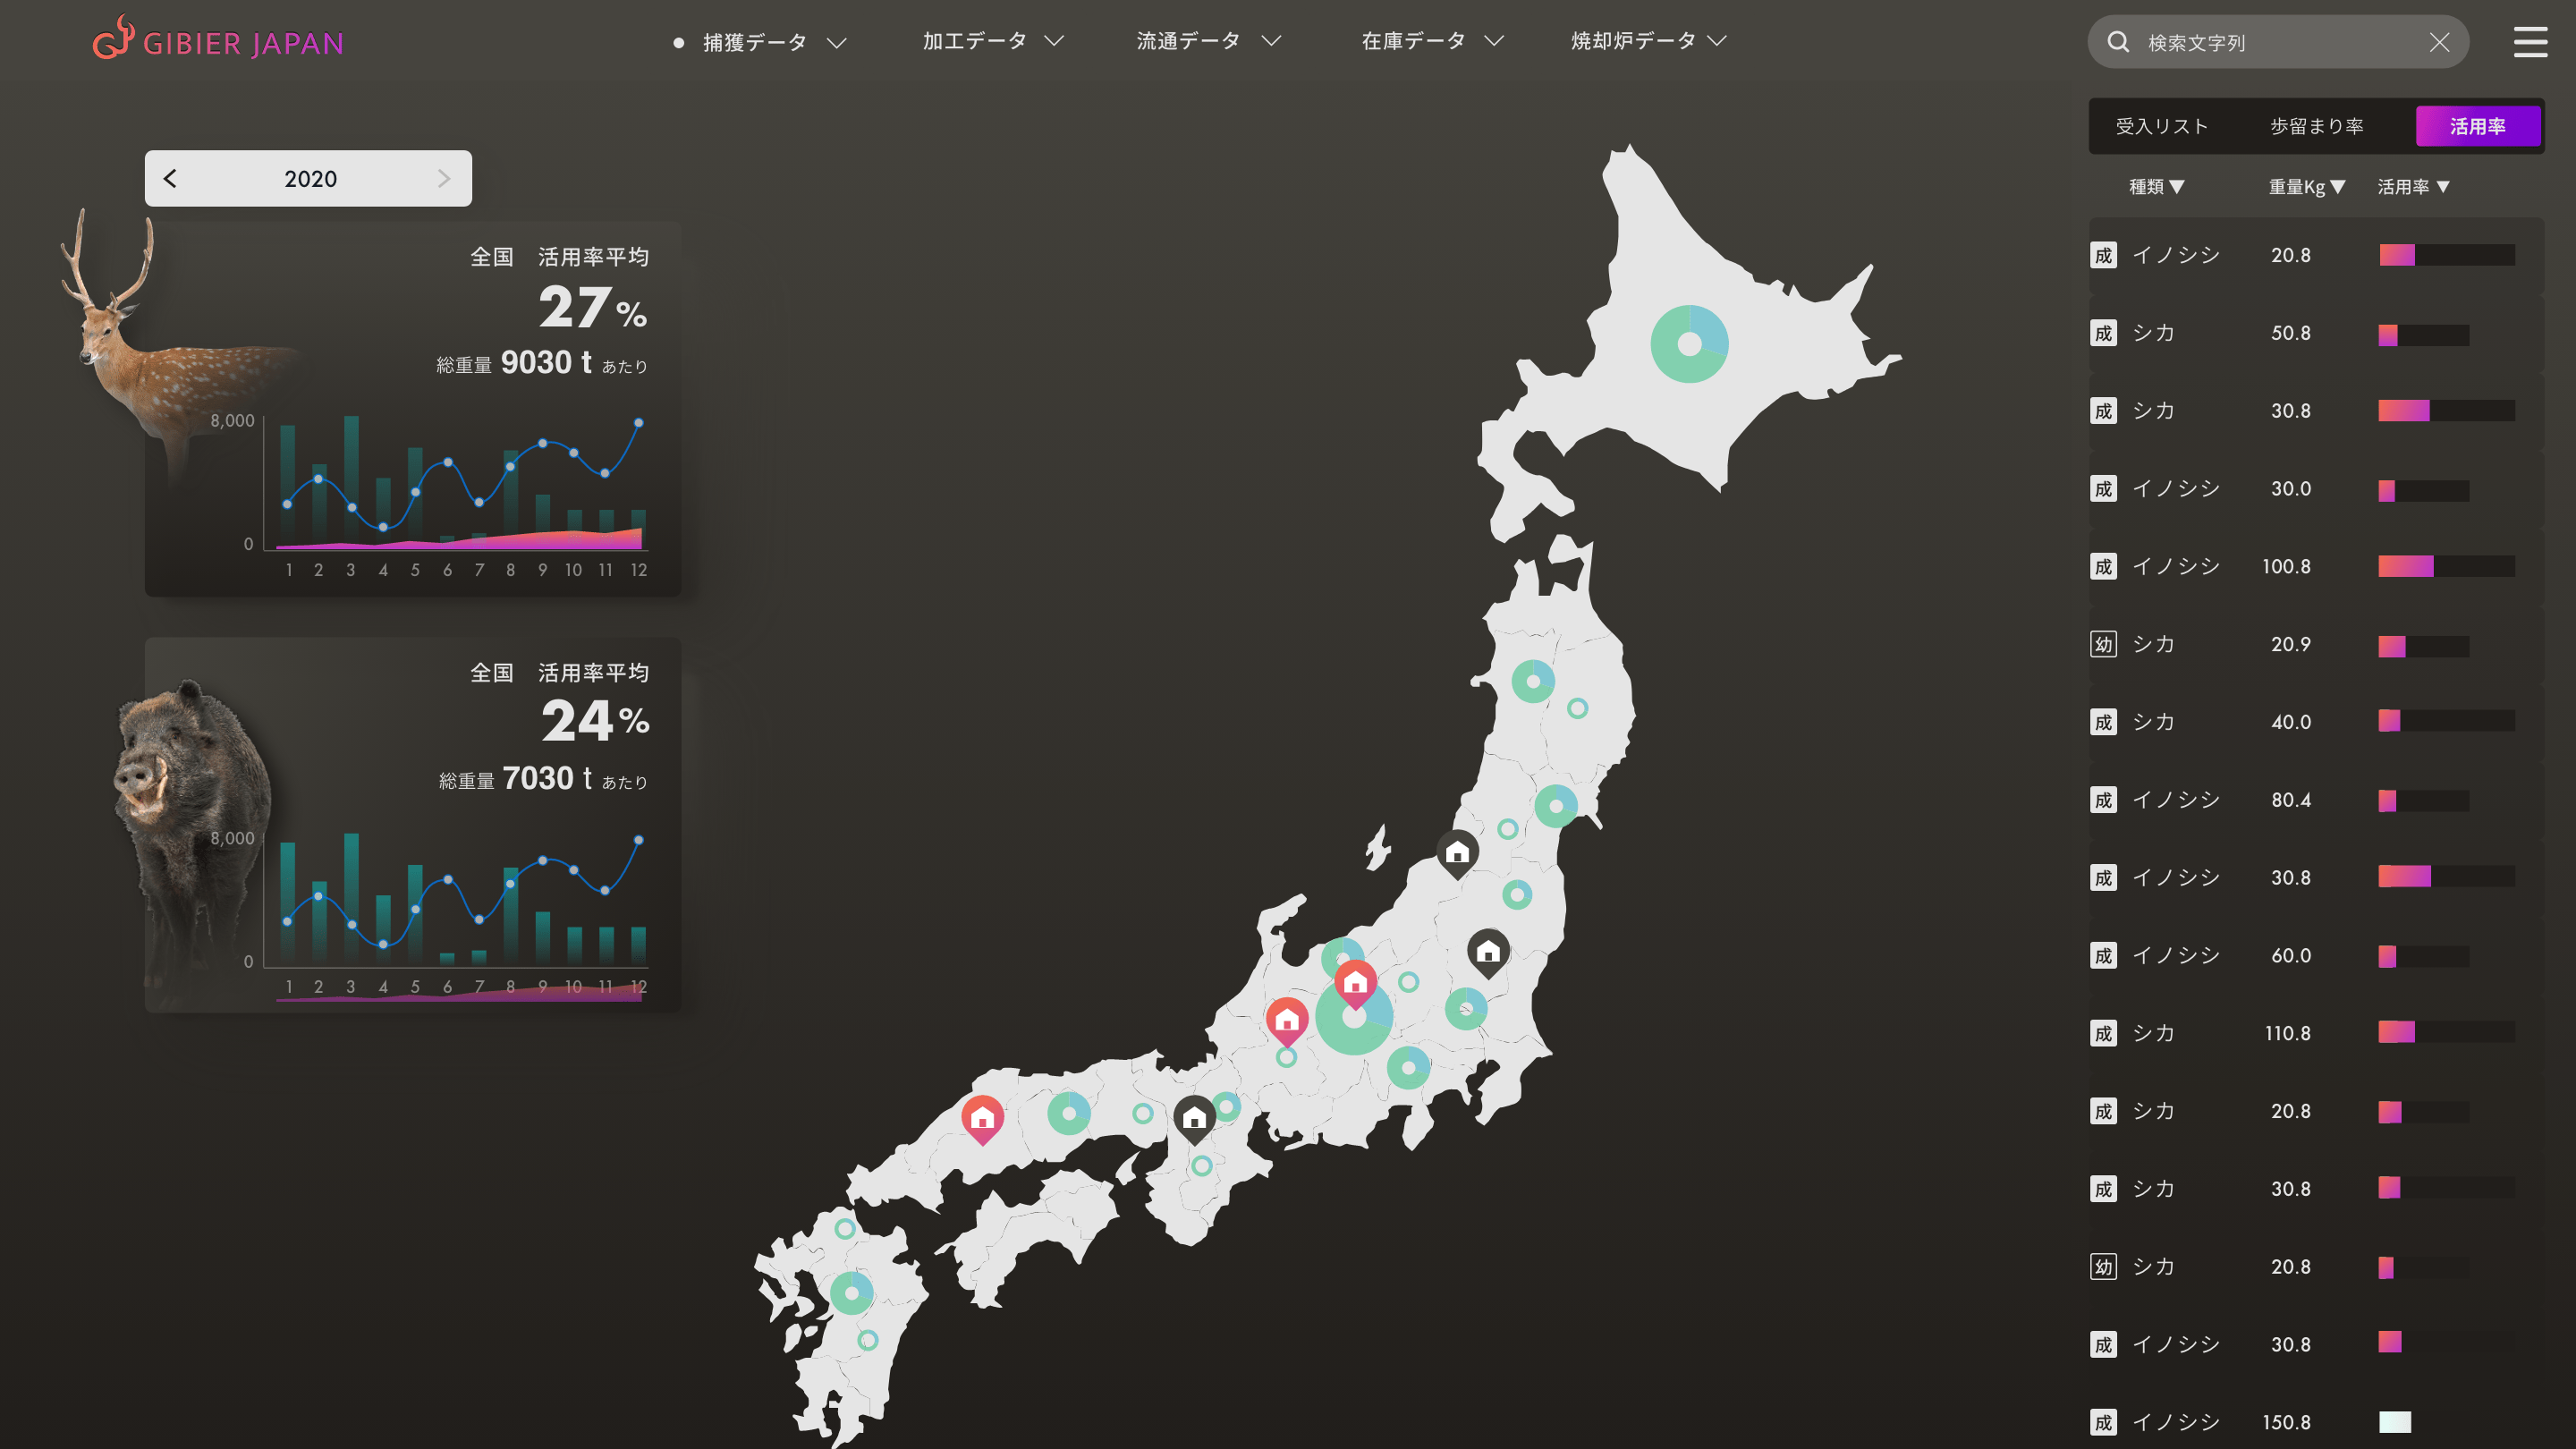 Gibier Japan